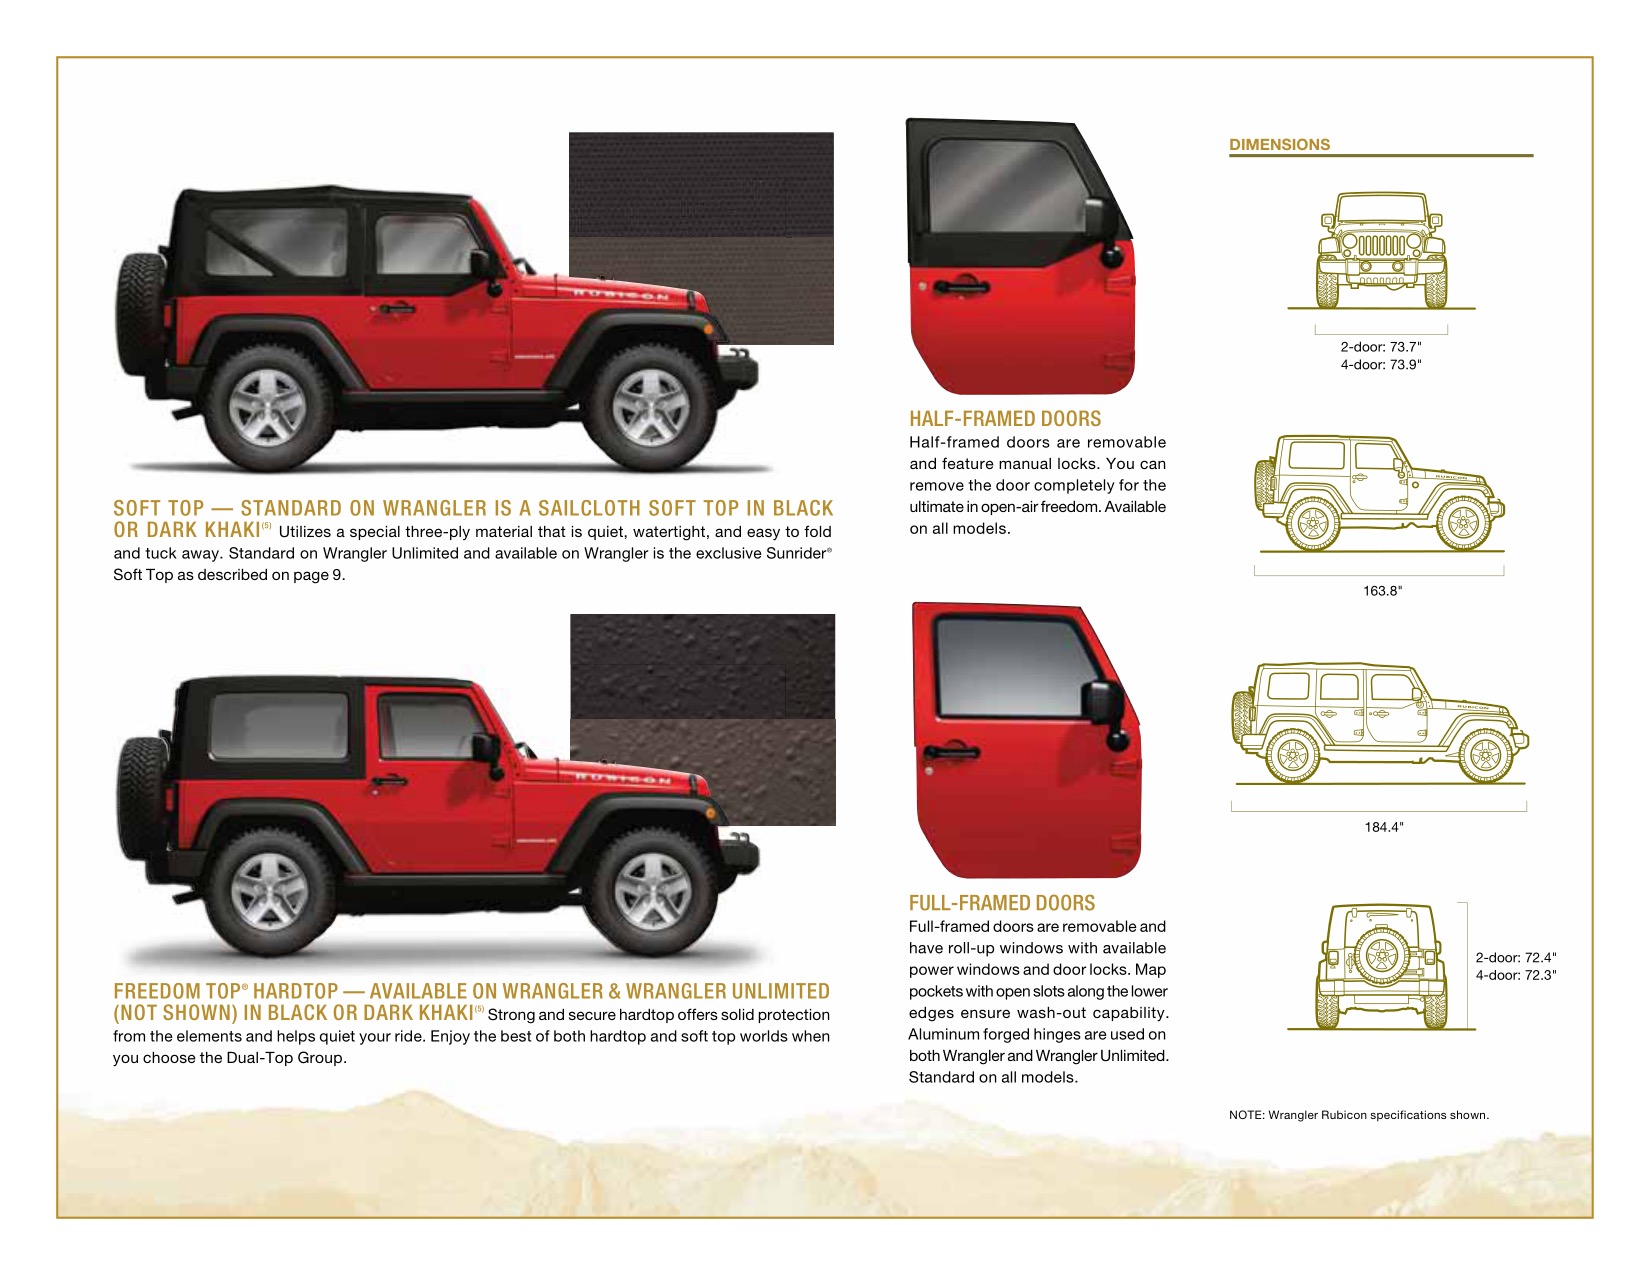 2008 Jeep Wrangler Brochure